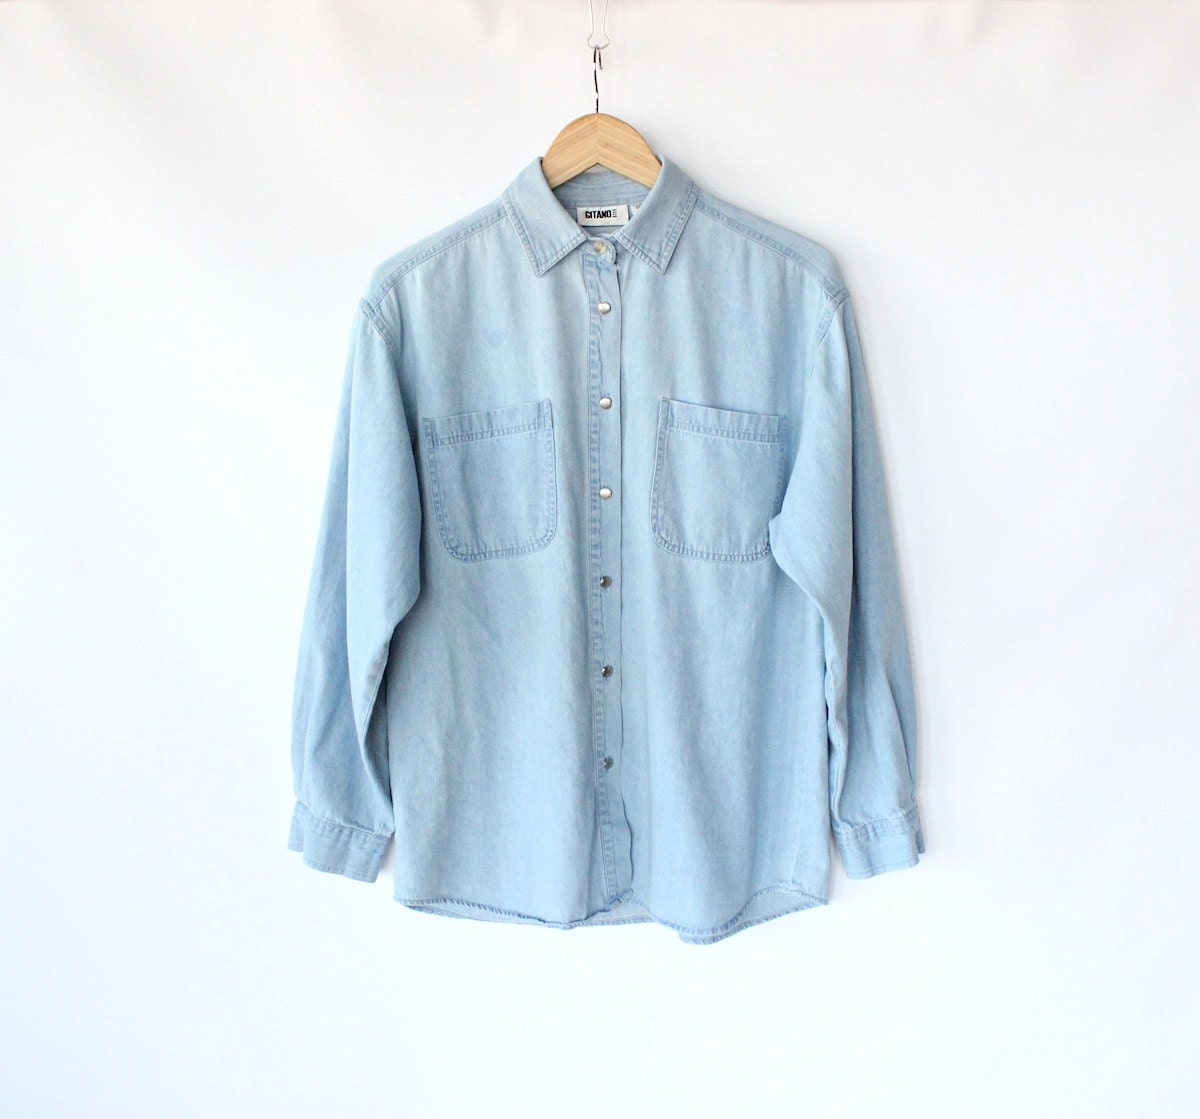 Vintage 80s Light Blue Jean Button Up Shirt // by vauxvintage